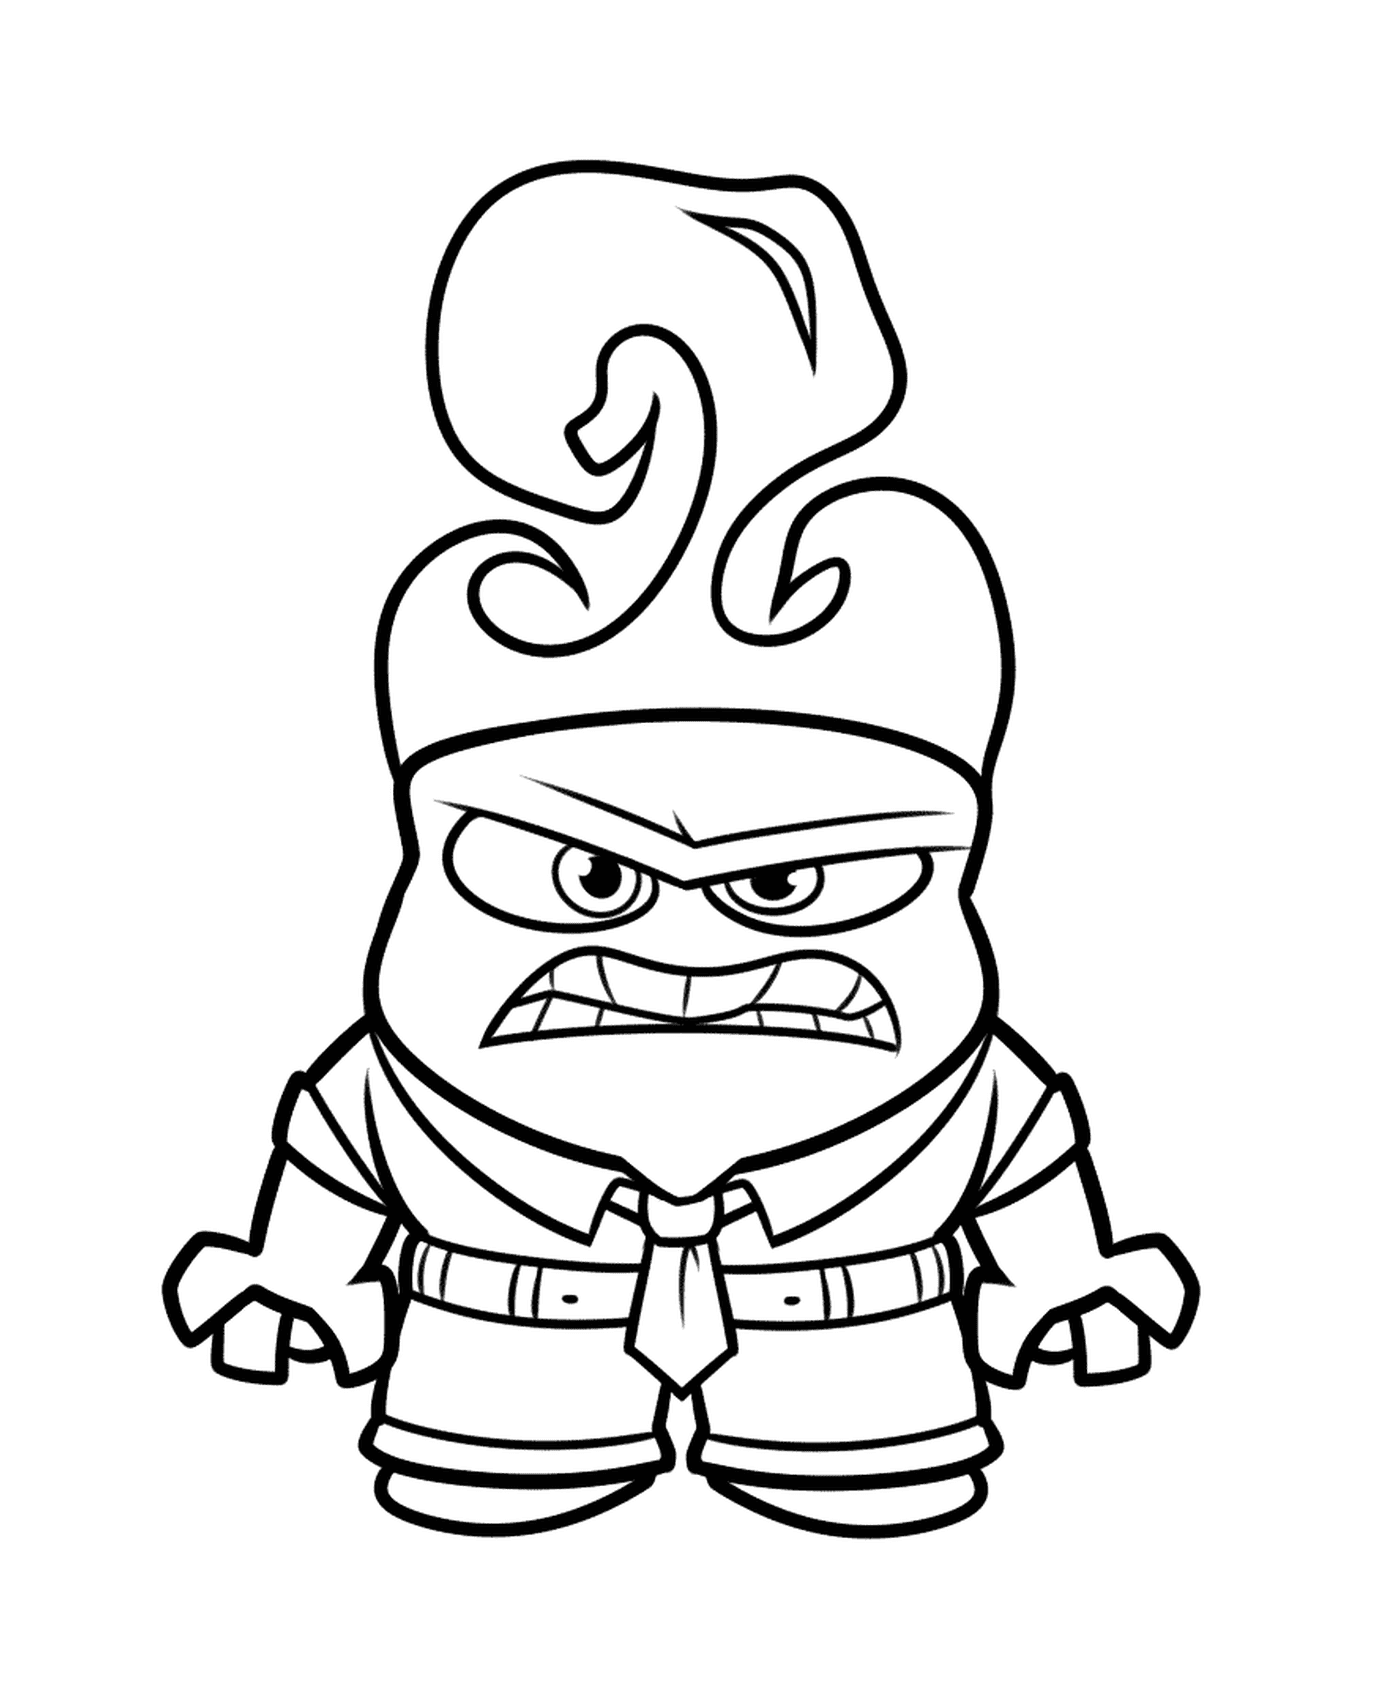  An angry cartoon character 